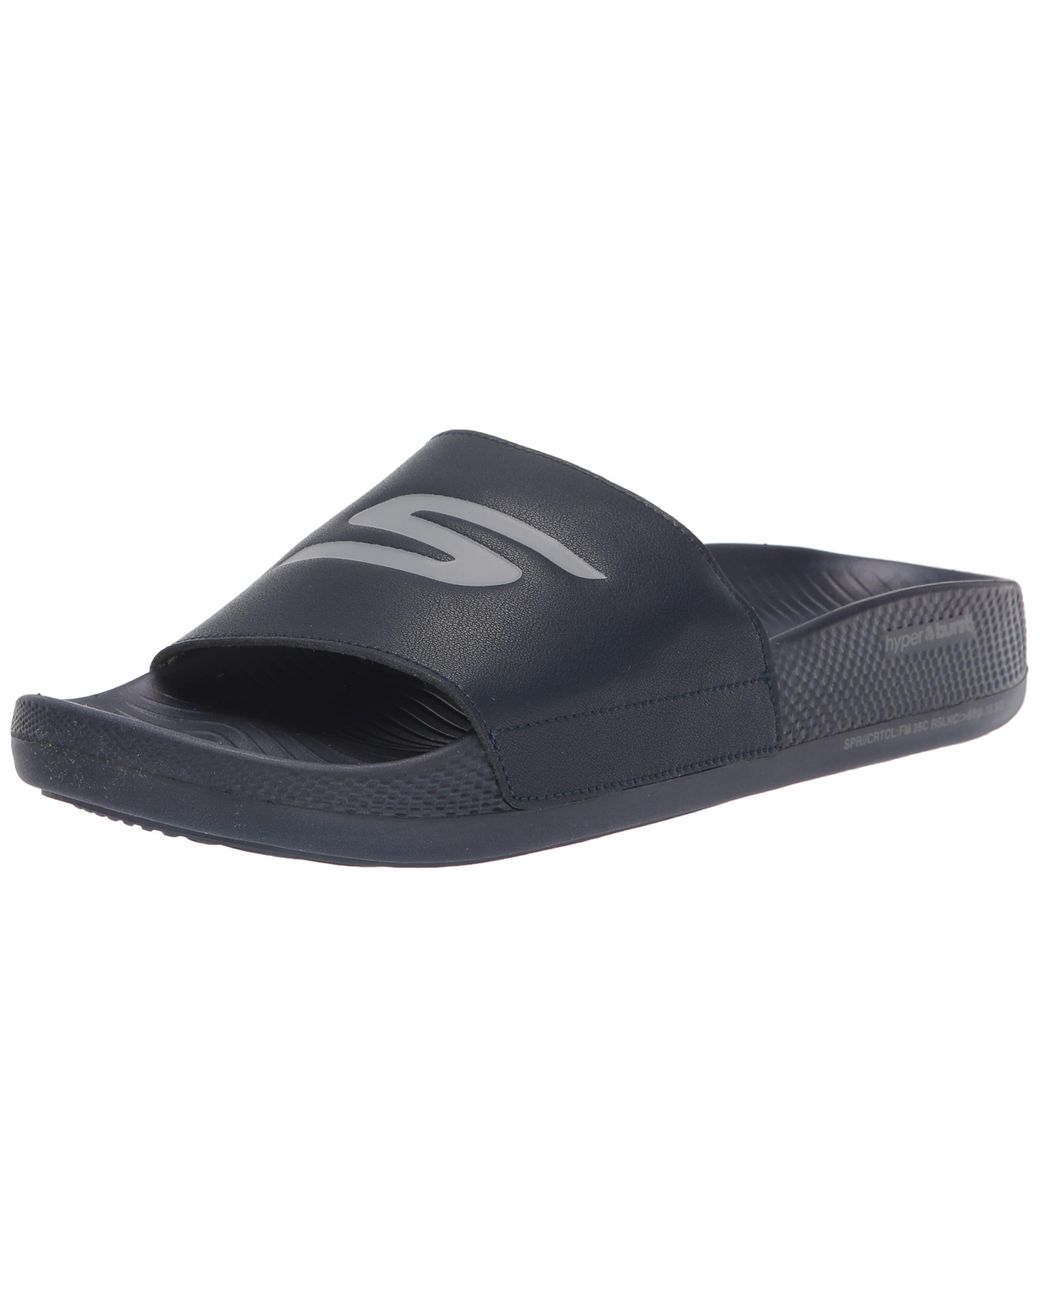 Skechers Hyper Burst Slide Sandals – Athletic Beach Shower Shoes With ...